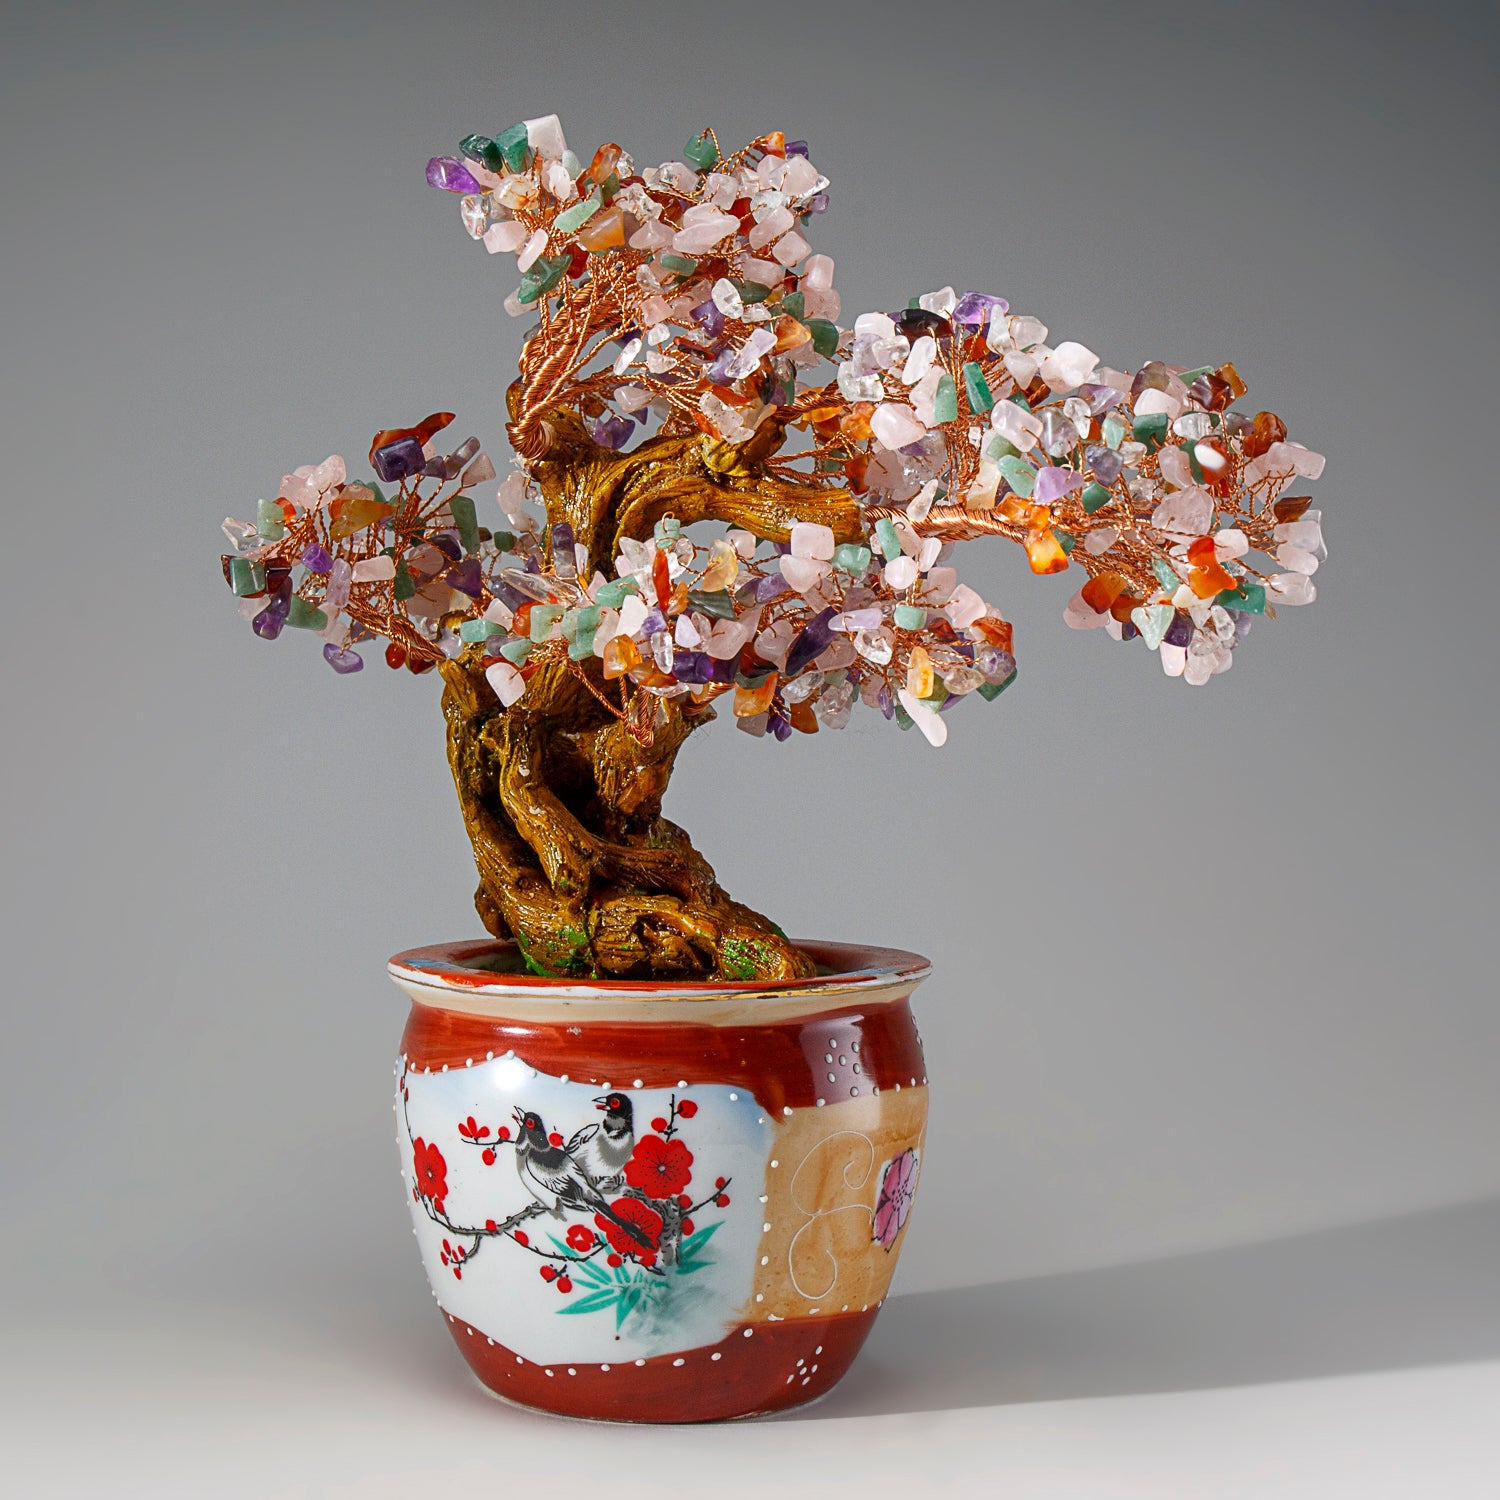 Genuine Multi Gemstone Bonsai Tree in Round Ceramic Pot (11” Tall)